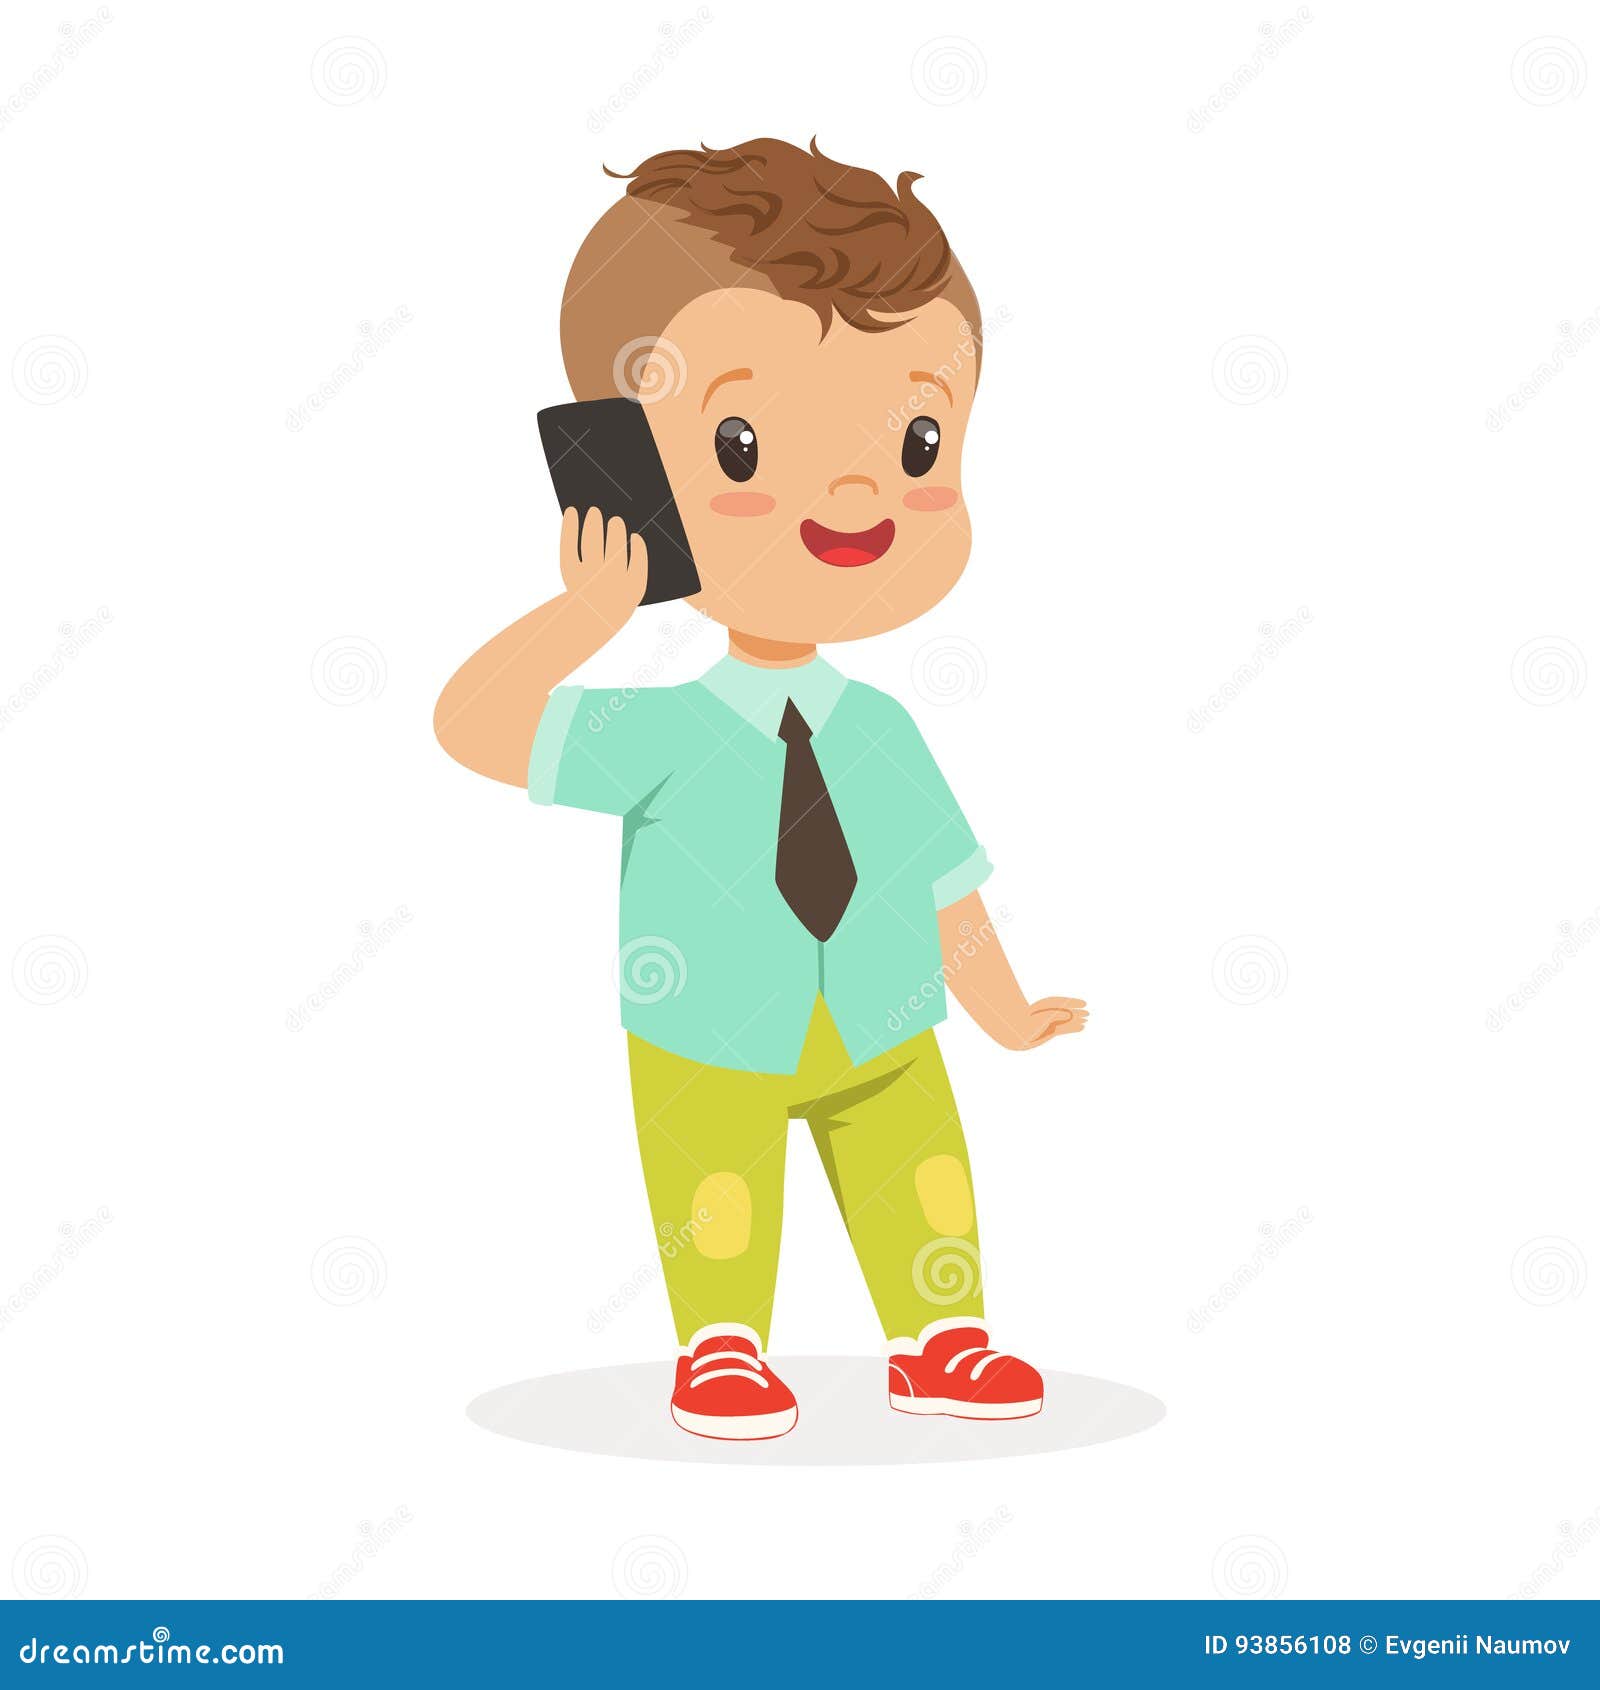 kid talking on phone clipart